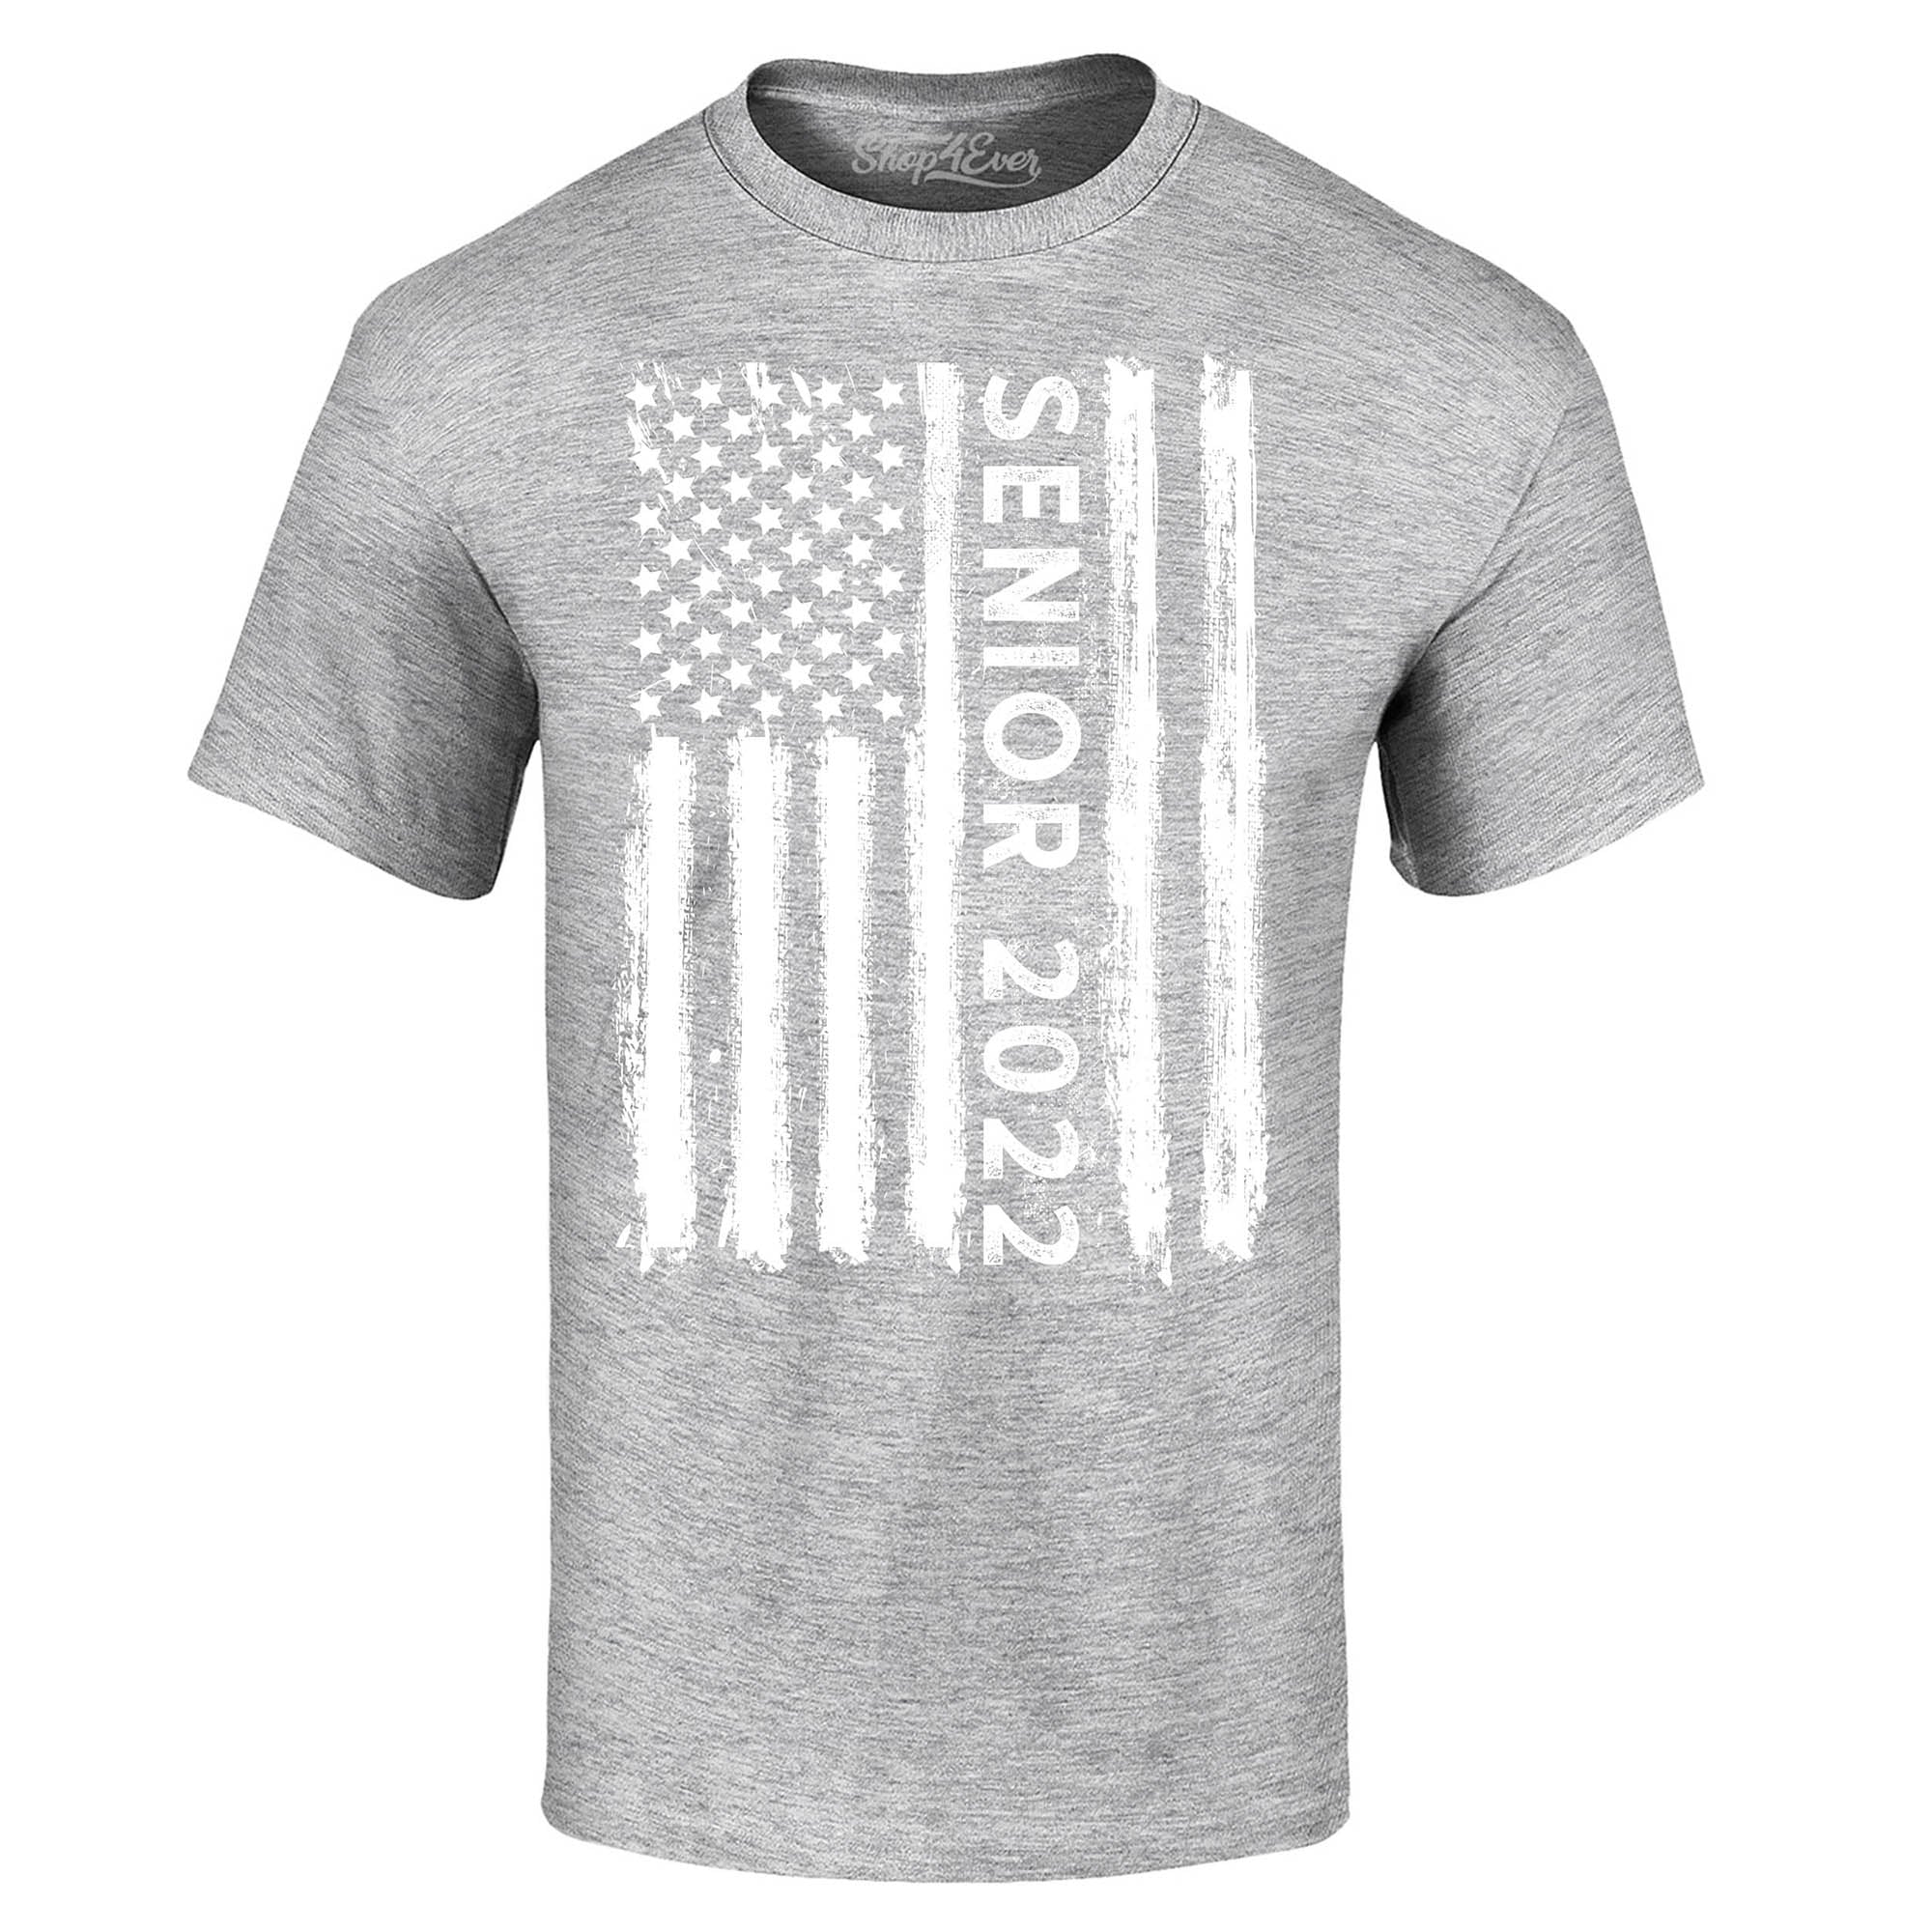 Senior 2022 USA American Flag Graduation T-Shirt